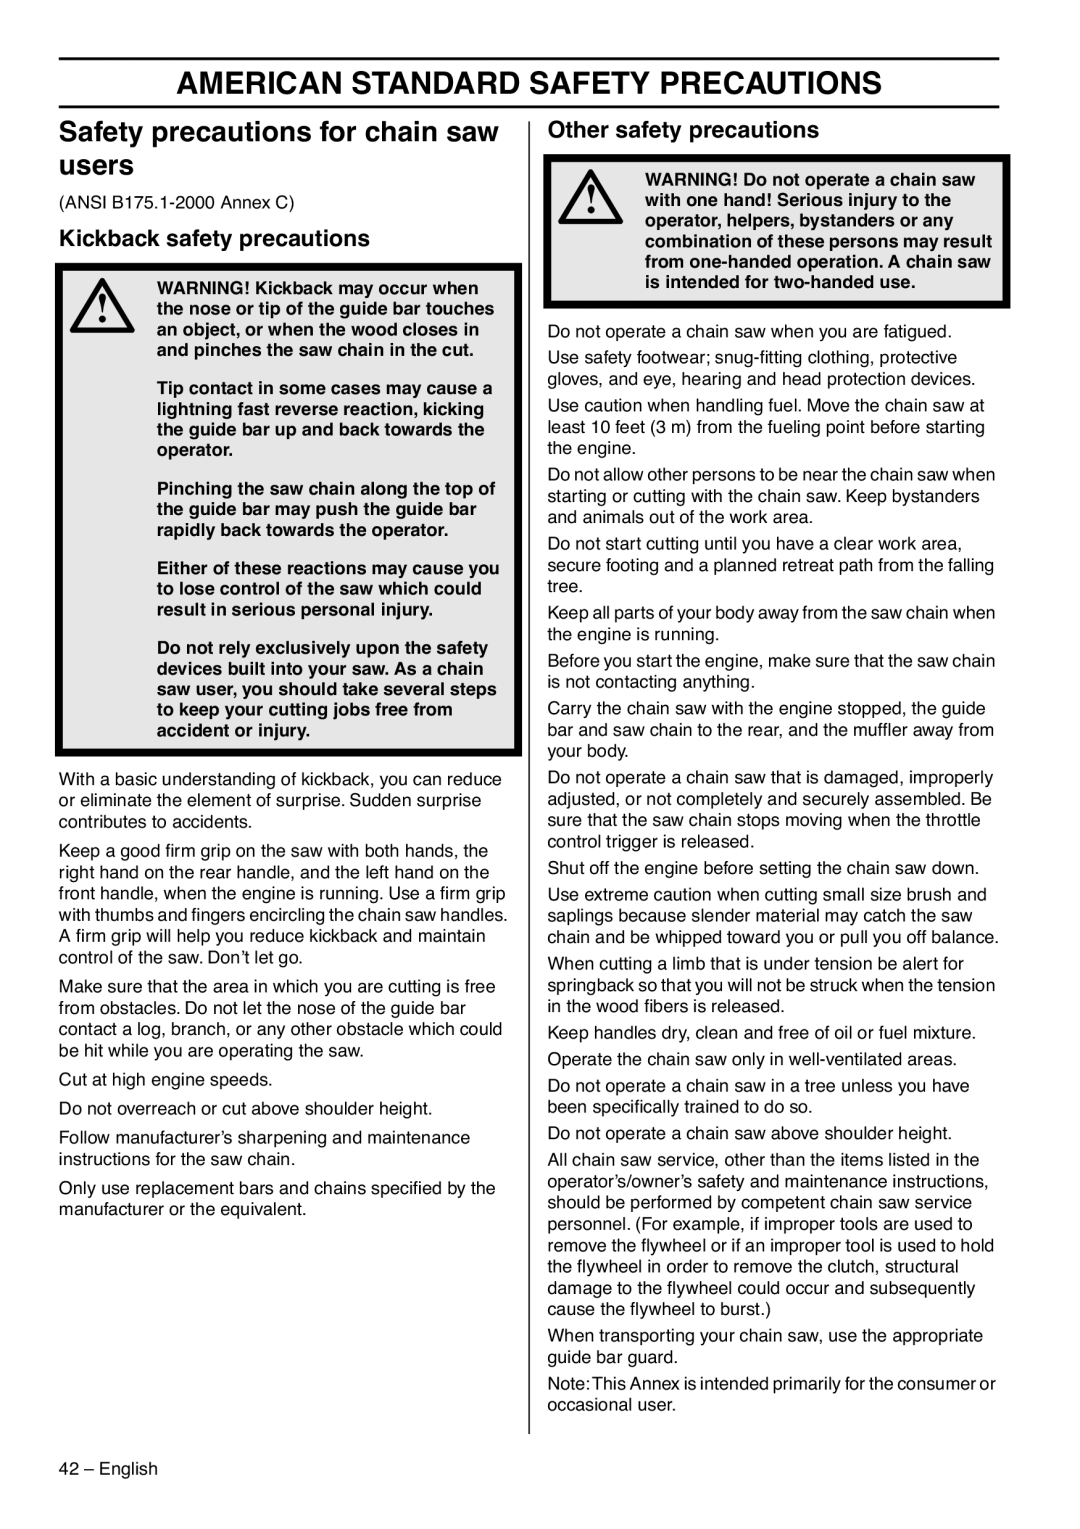 Husqvarna 385XPG American Standard Safety Precautions, Safety precautions for chain saw users, Kickback safety precautions 